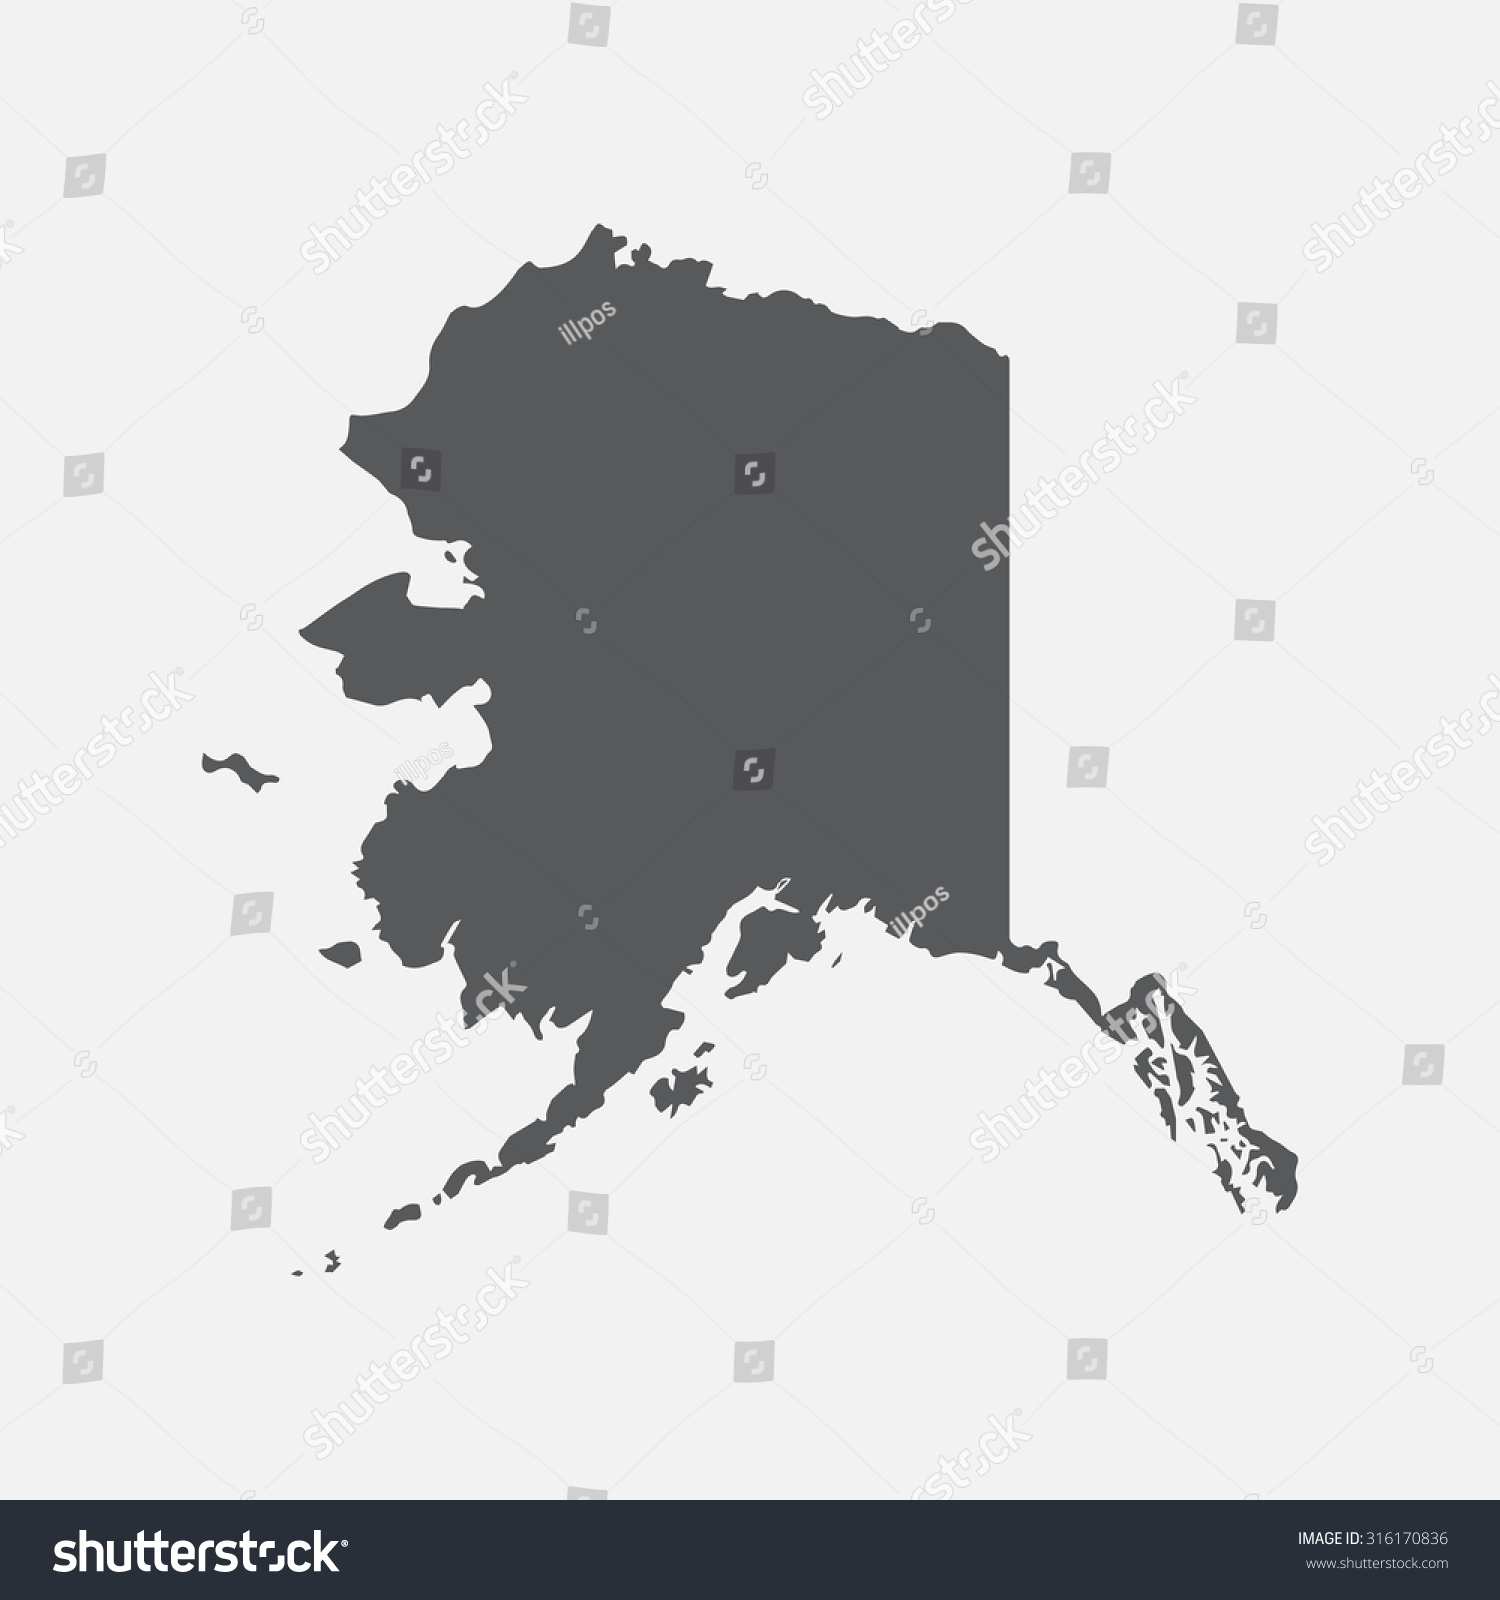 Alaska State Border Map Royalty Free Stock Vector 316170836 4249